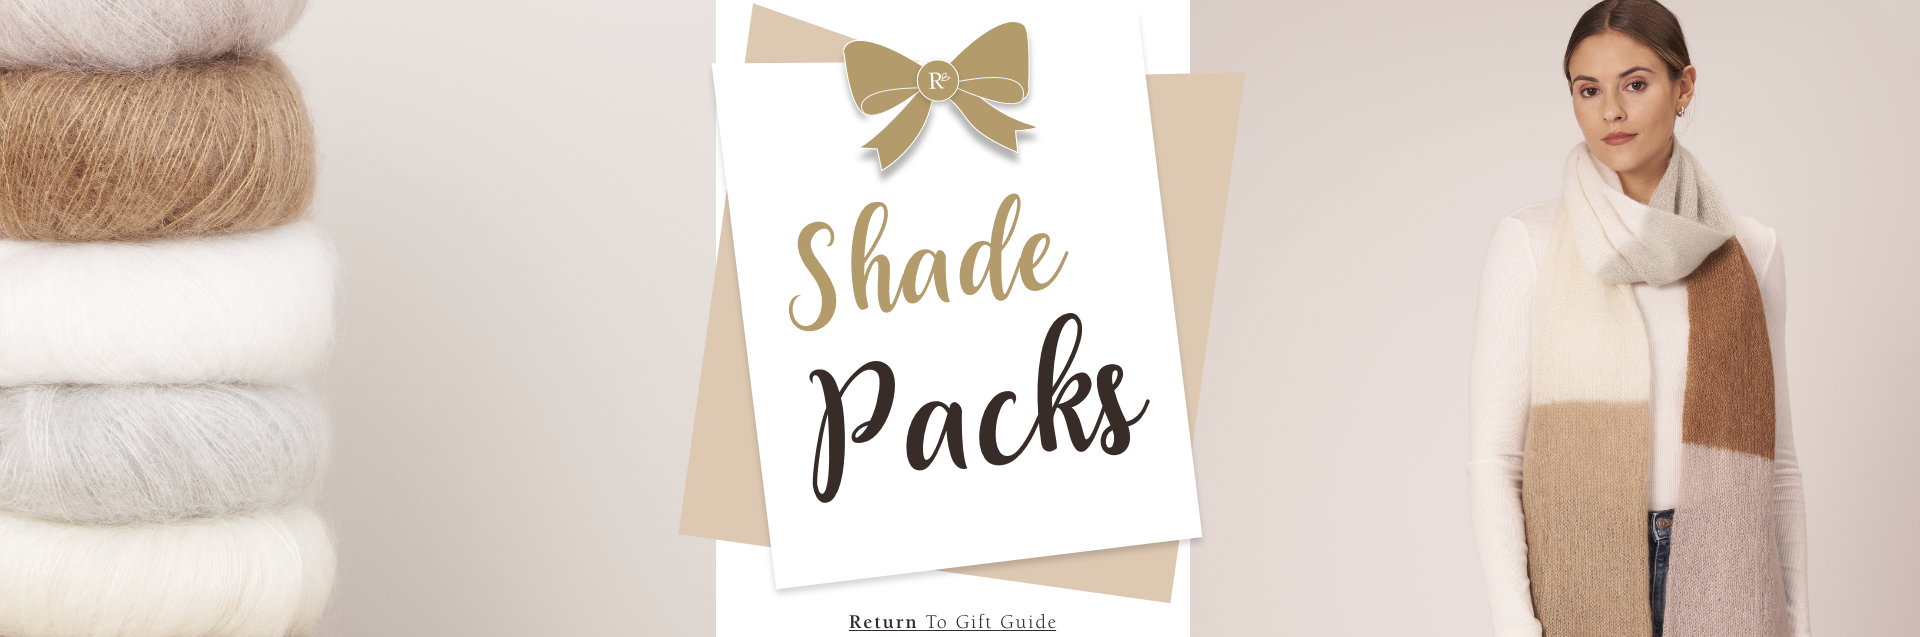 Shade Packs banner